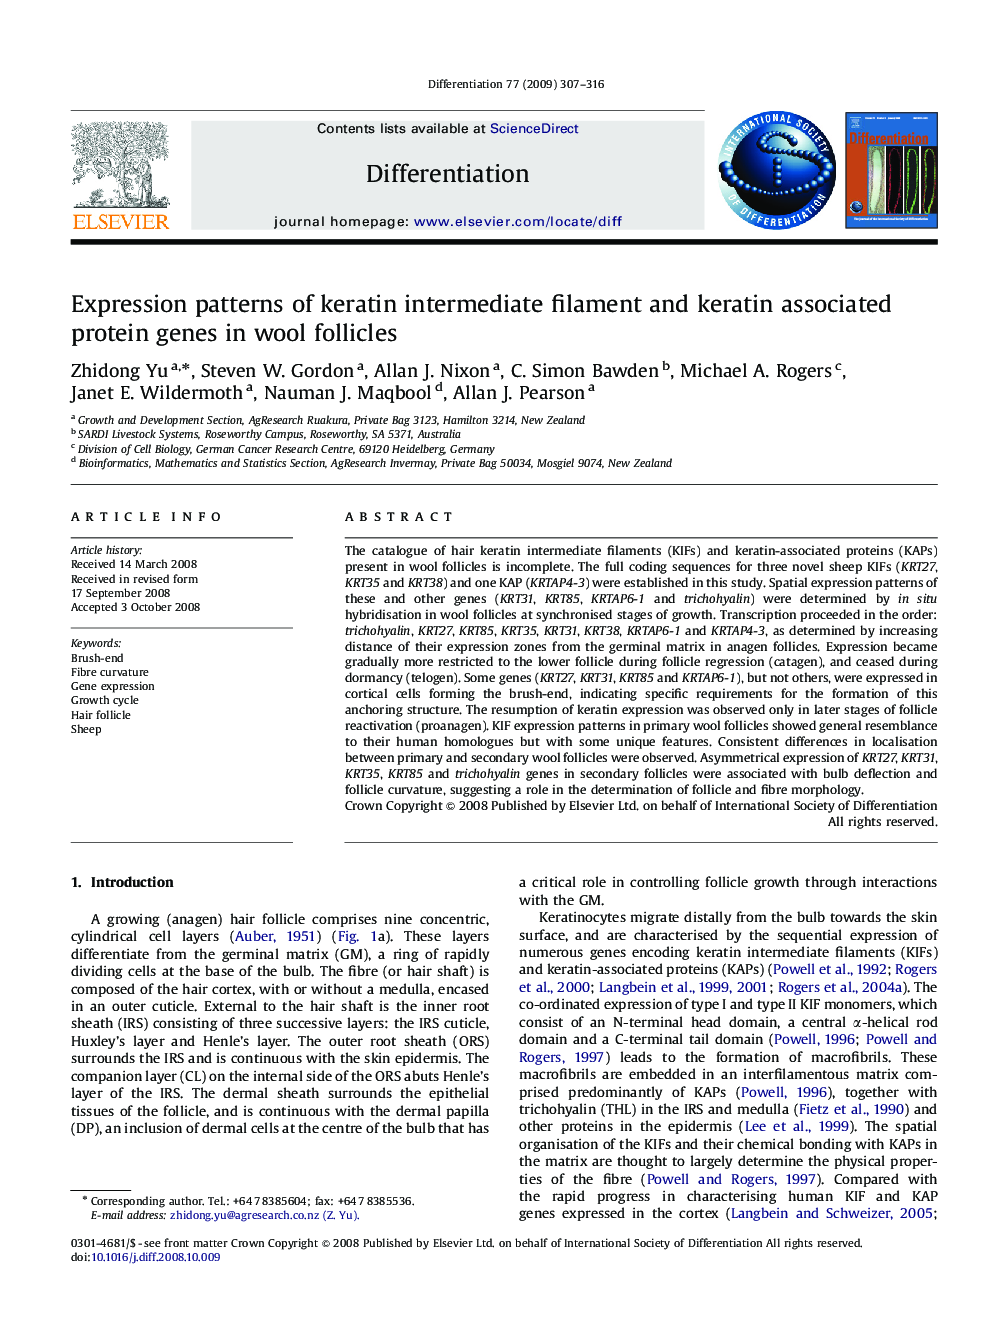 Expression patterns of keratin intermediate filament and keratin associated protein genes in wool follicles